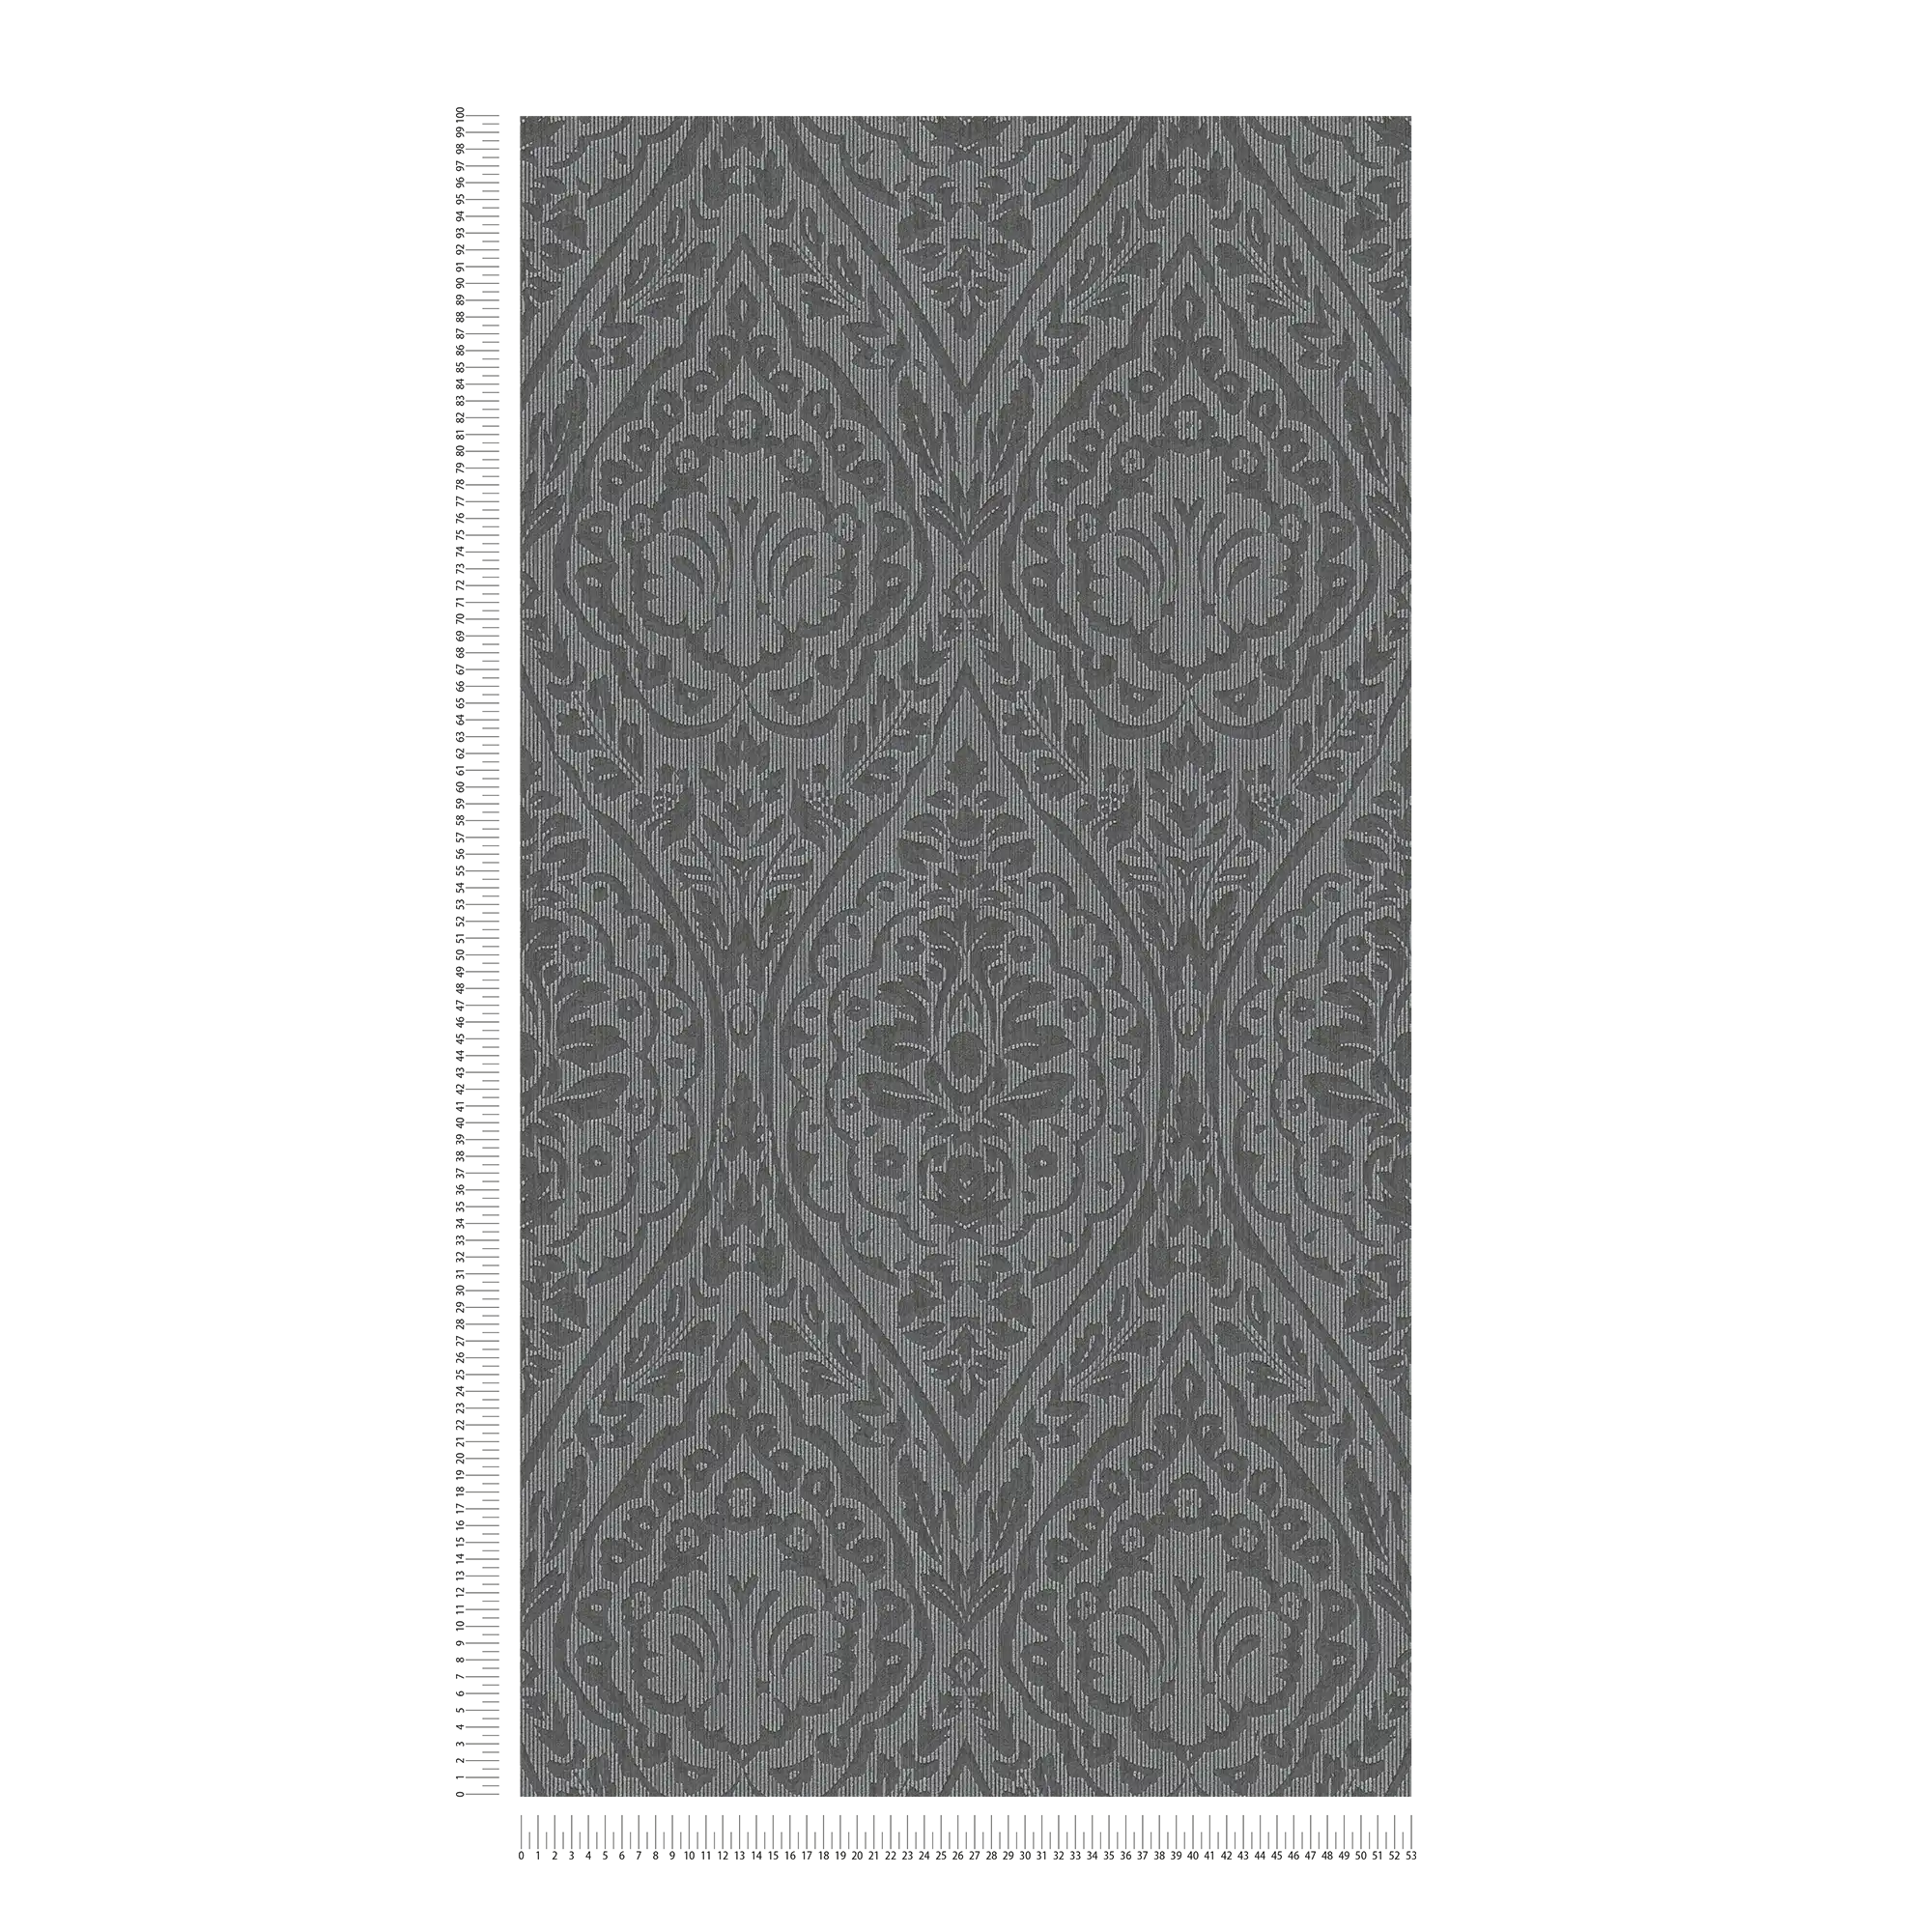             Non-woven wallpaper with ornamental pattern & structure design - brown, black
        